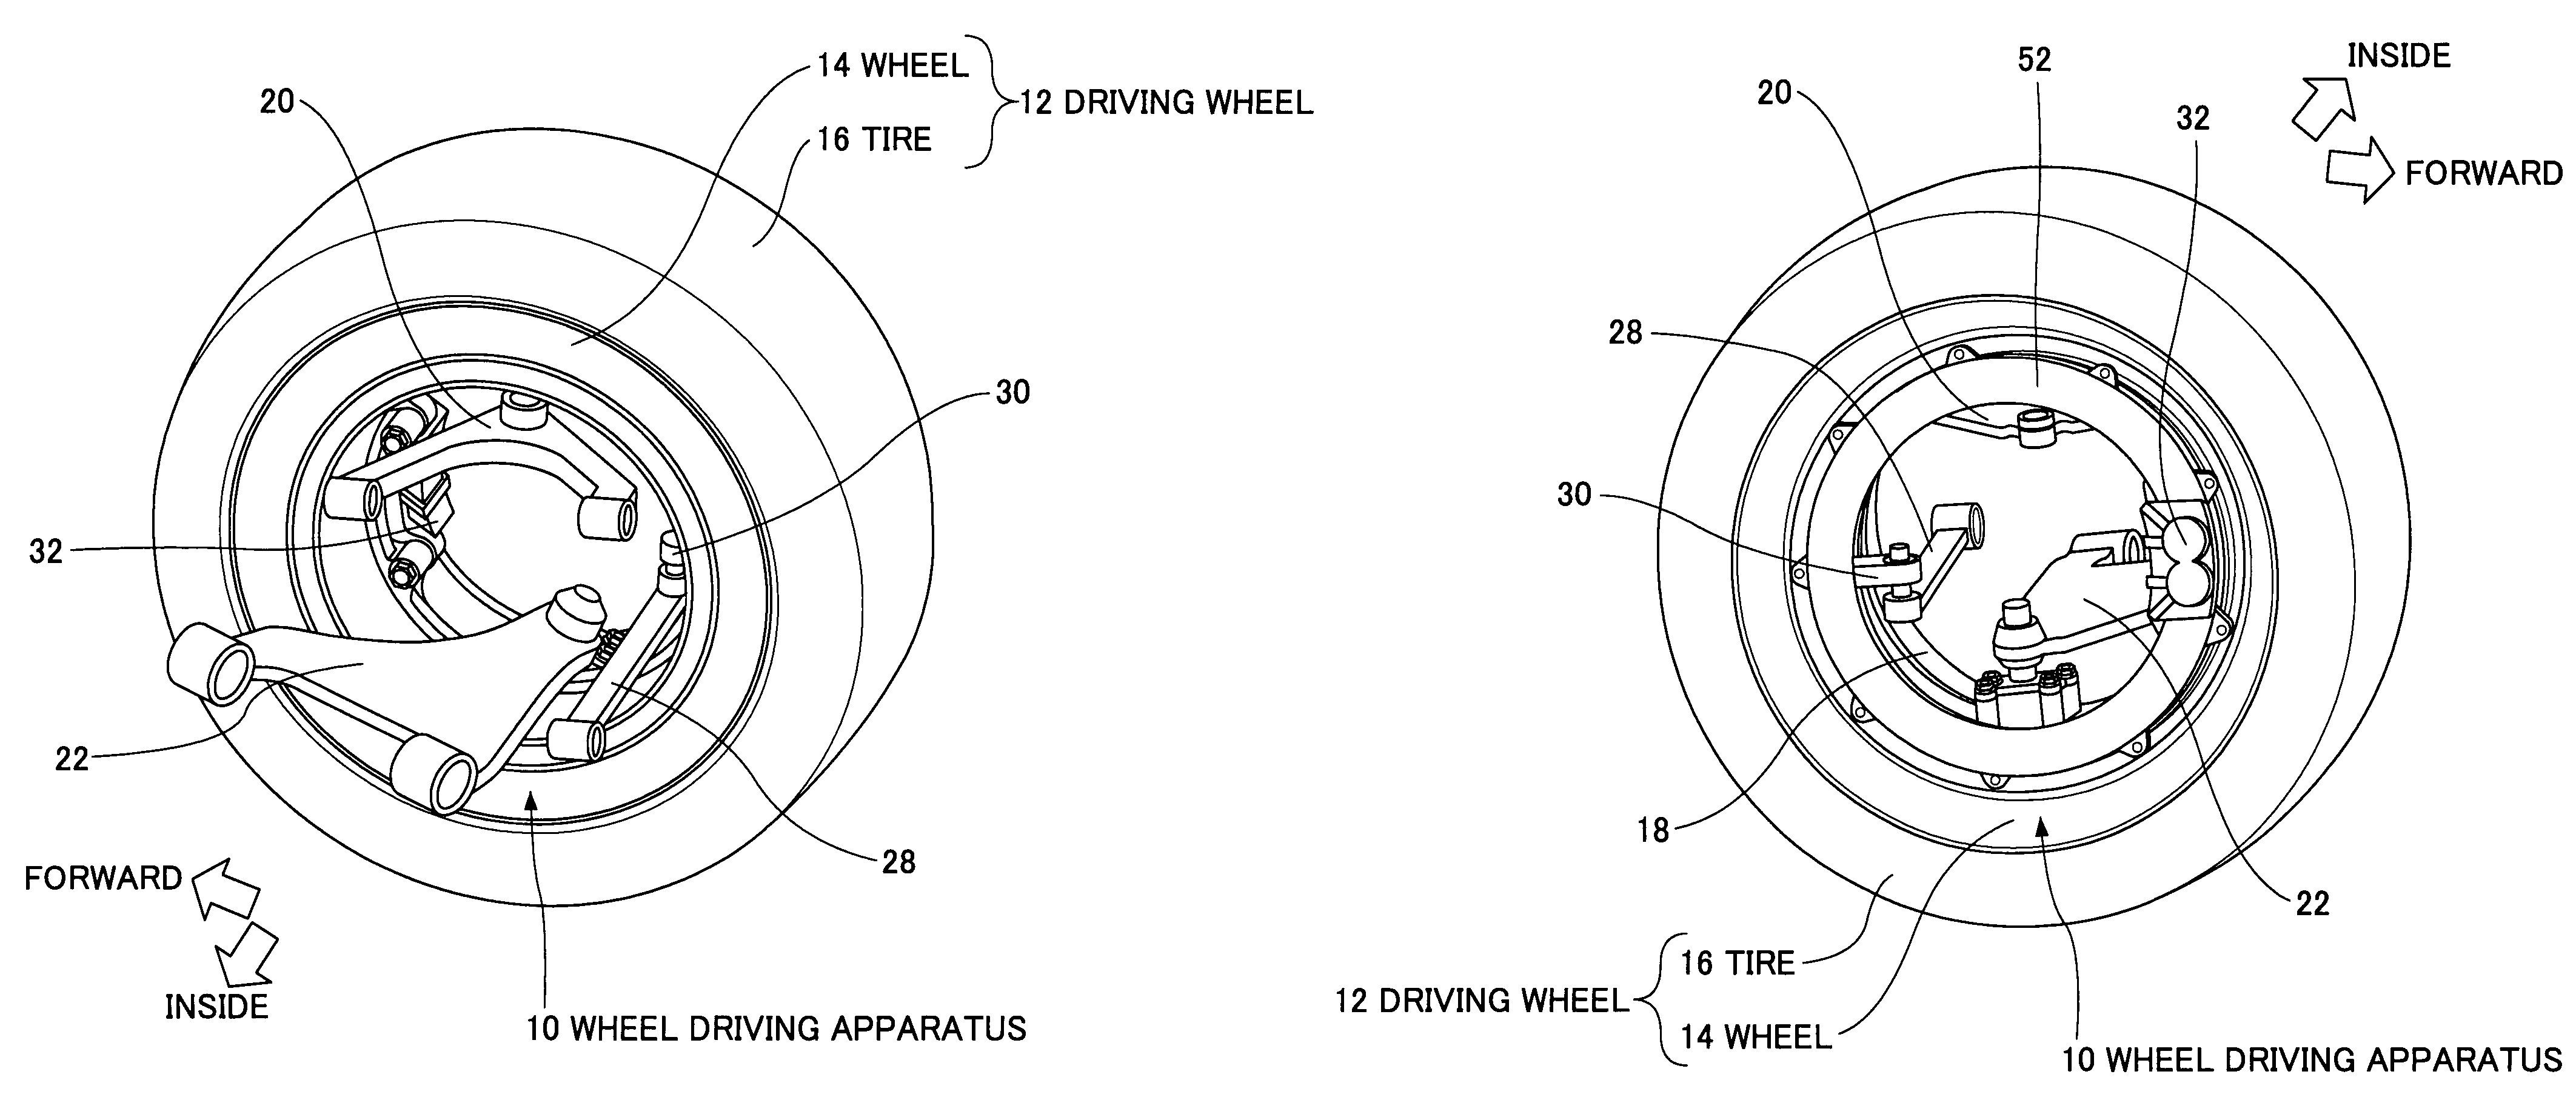 Wheel driving apparatus